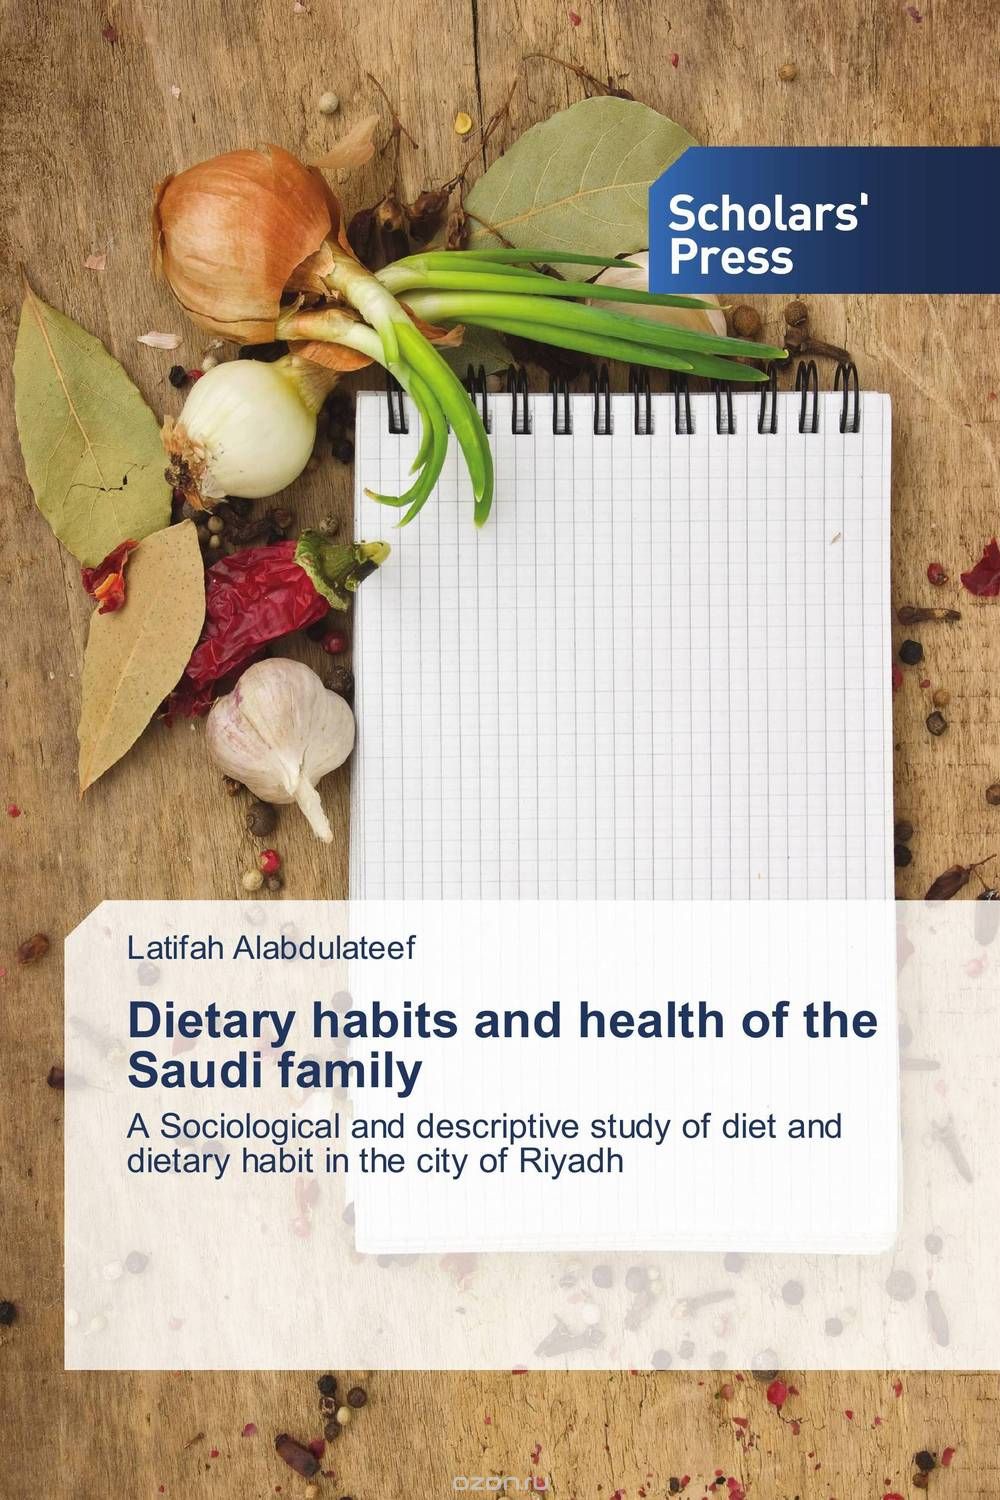 Скачать книгу "Dietary habits and health of the Saudi family"